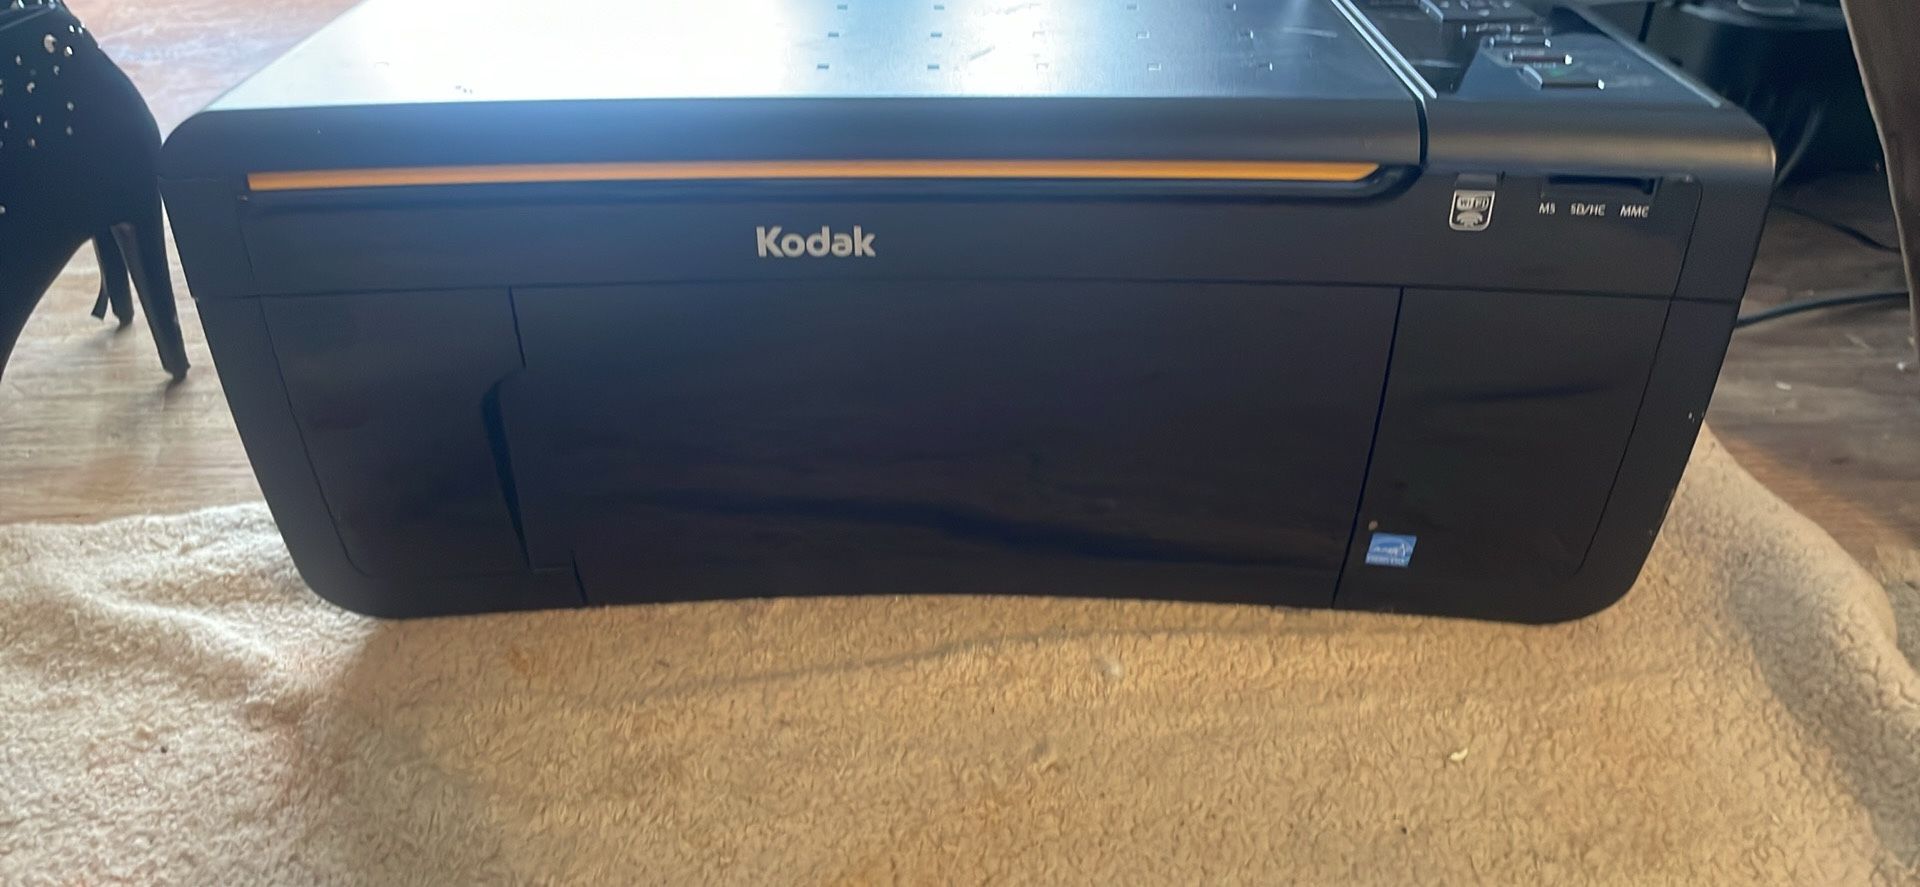 Kodak All In One Printer